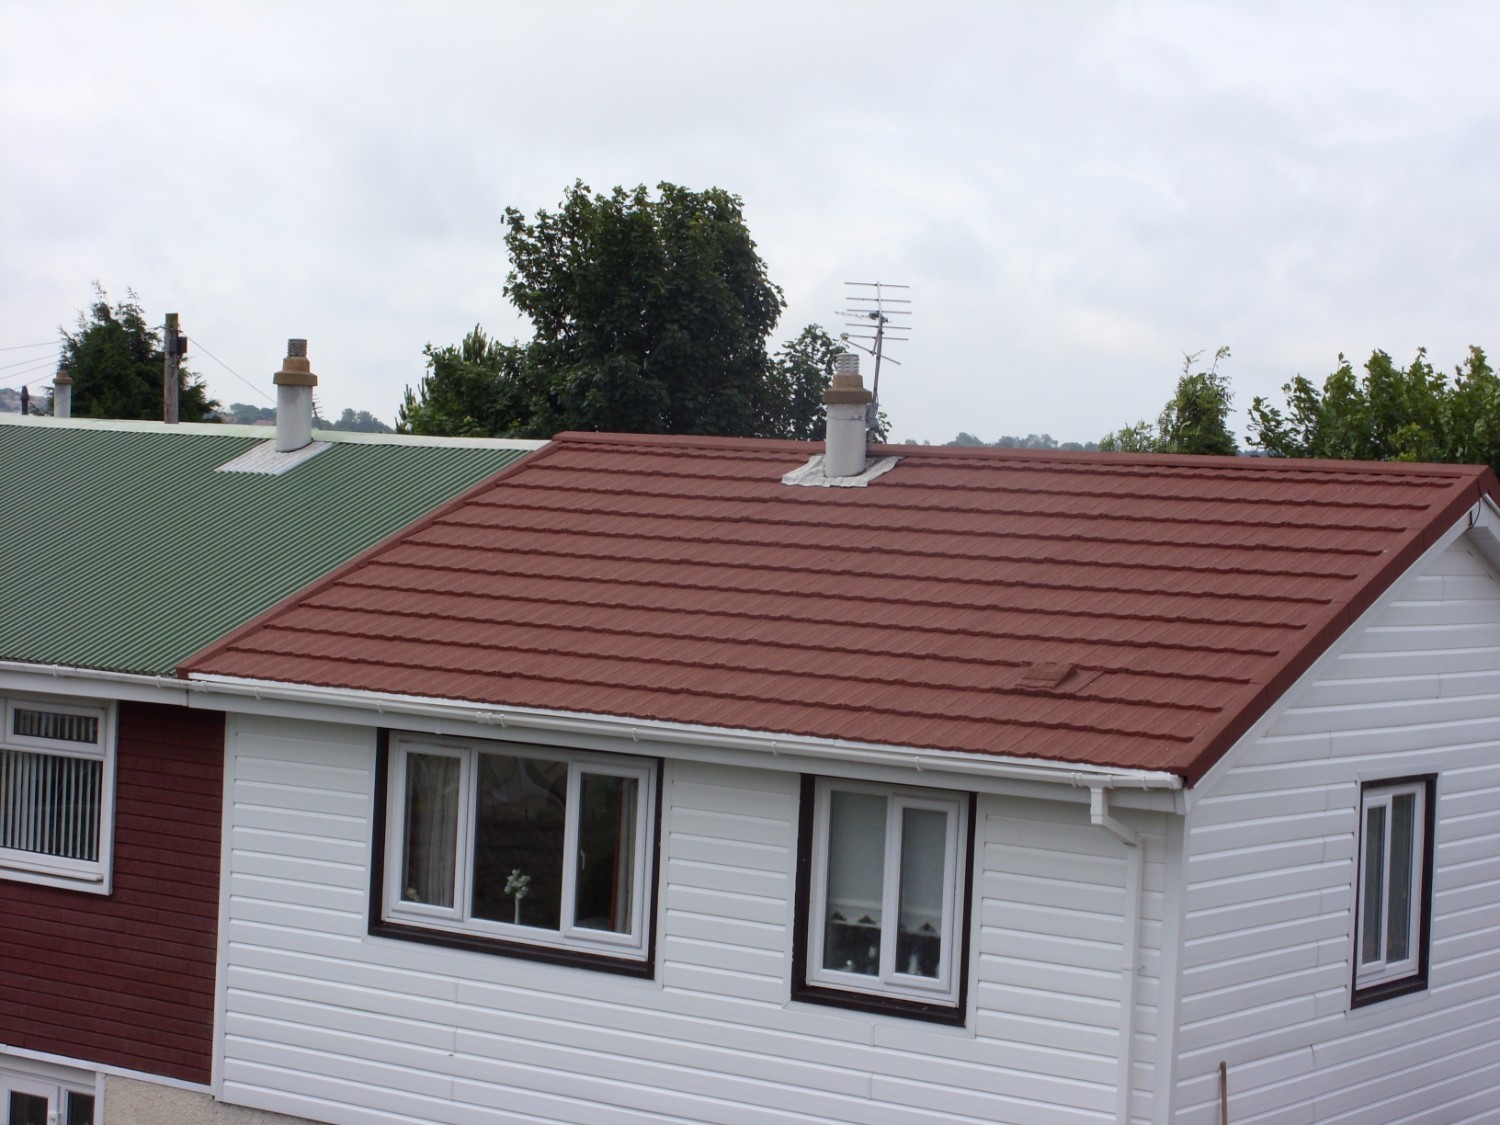 Lightweight Metal Roof Tiles on Houses